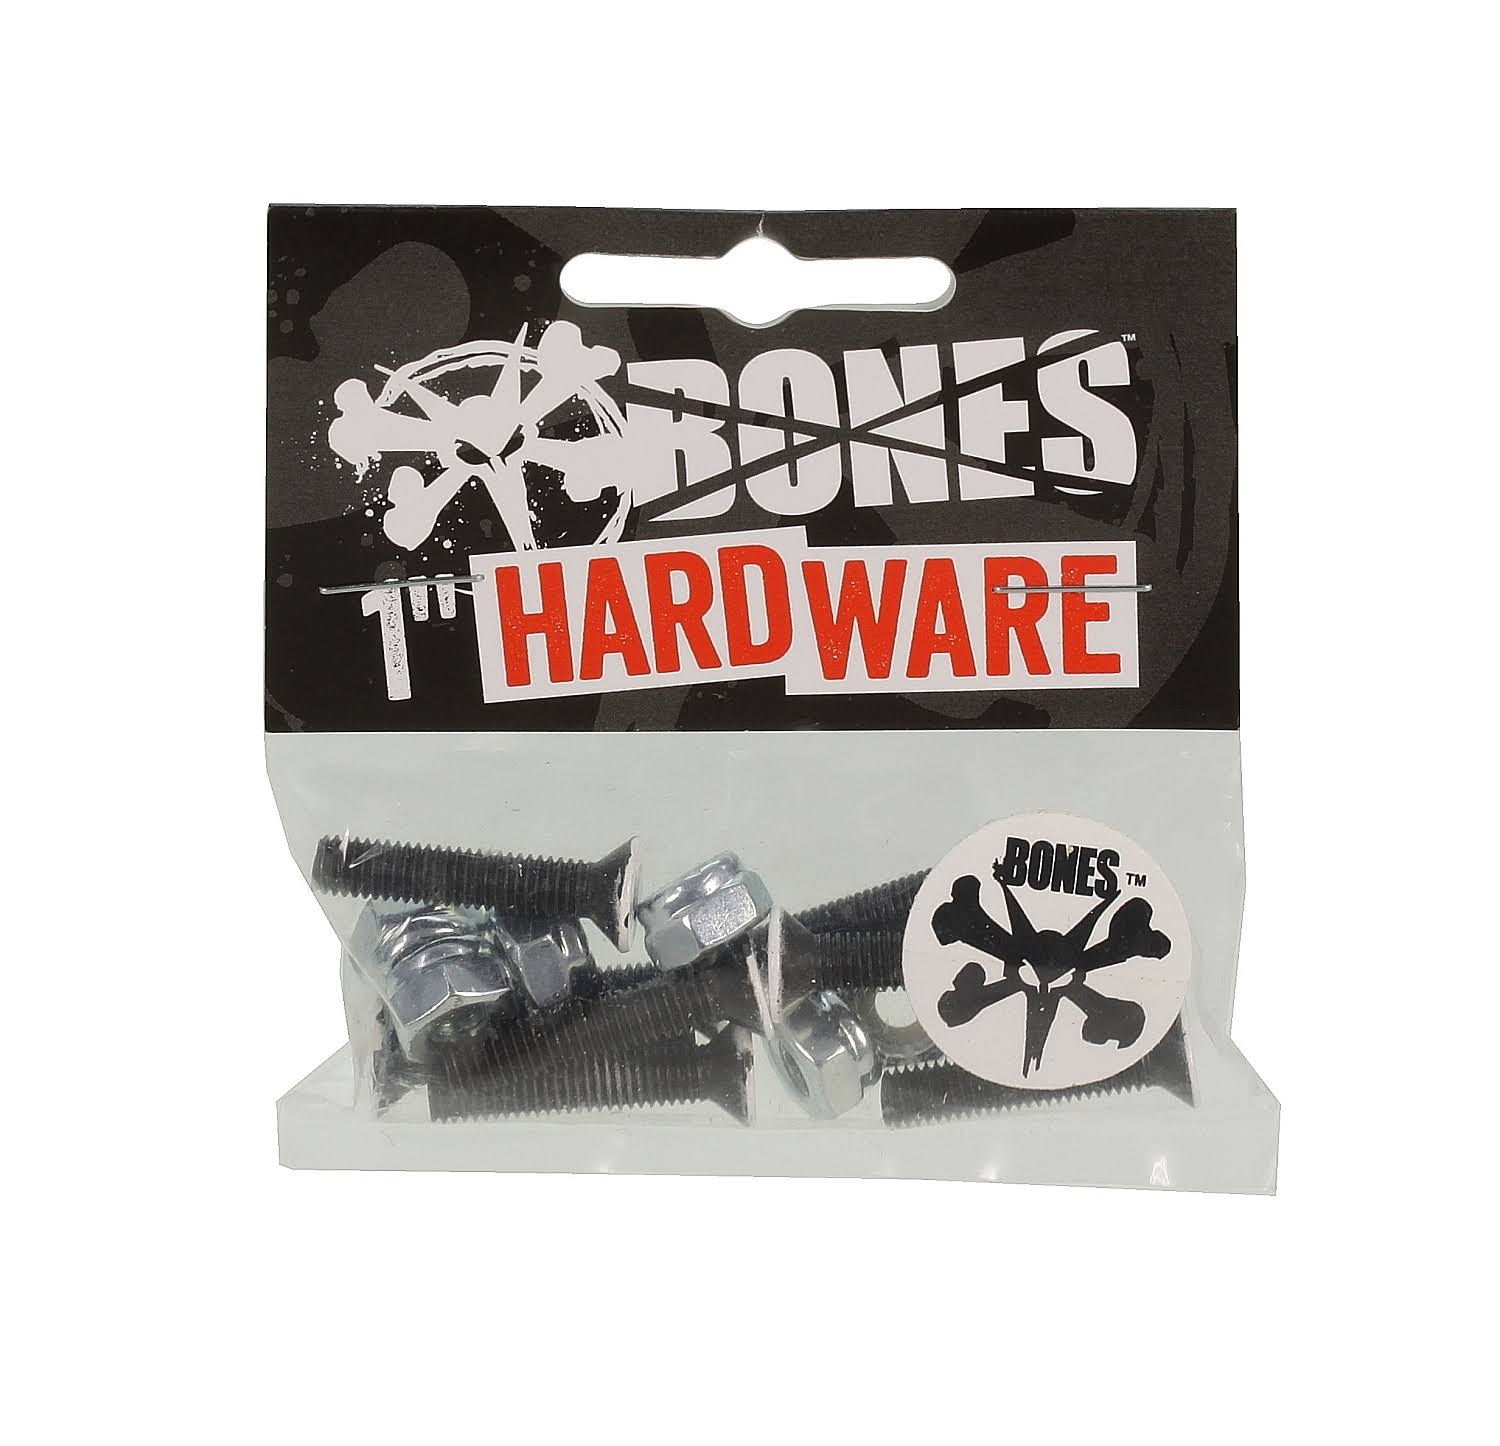 Bones 1" vato hardware